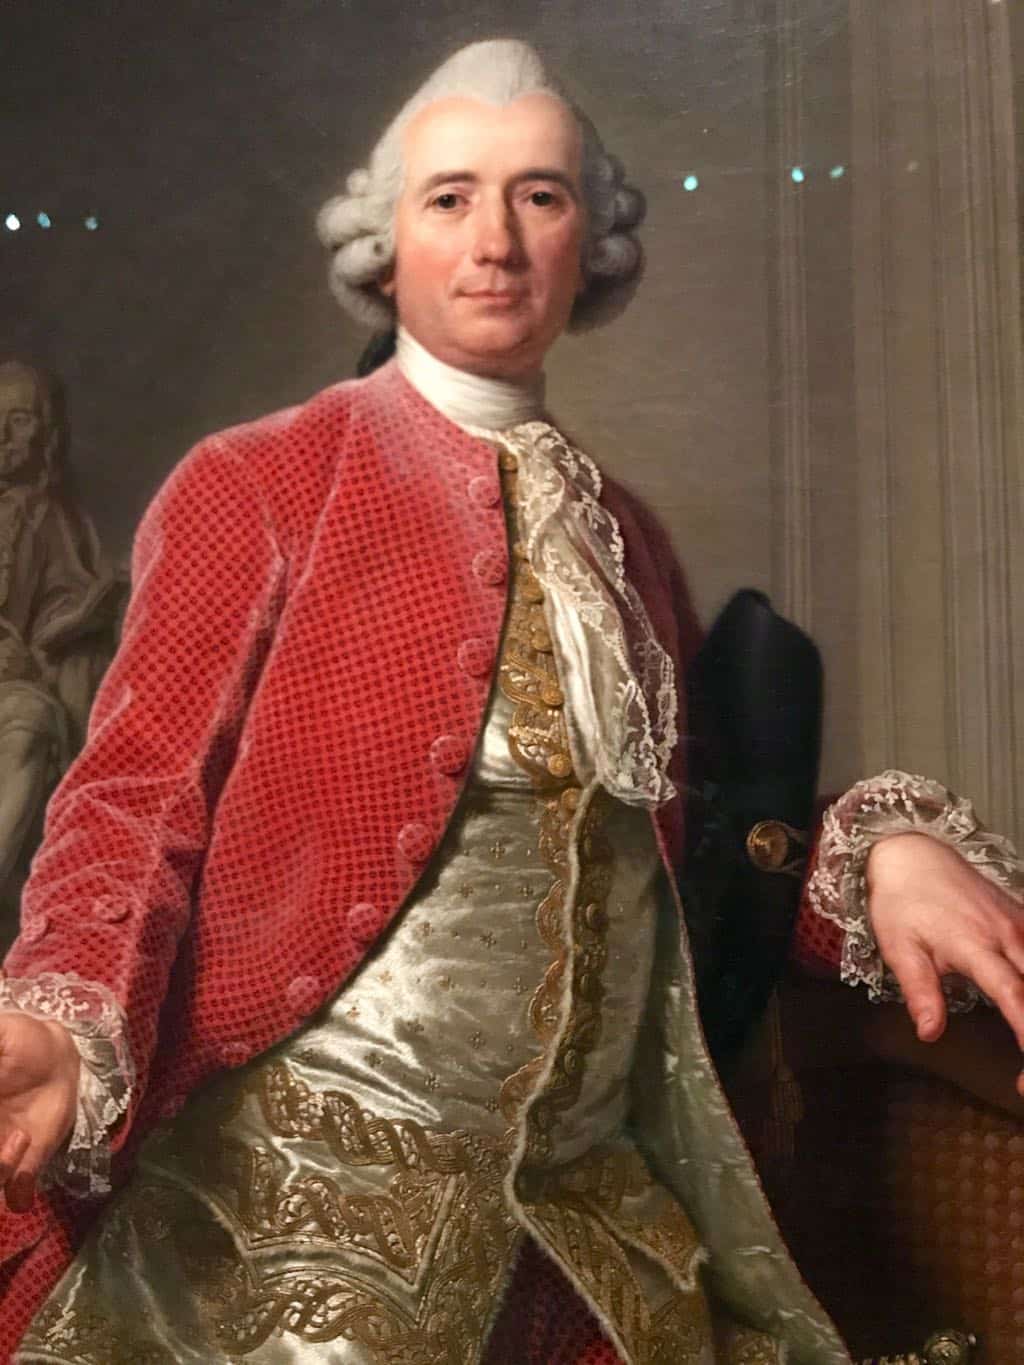 Portrait of a gentleman in period costume